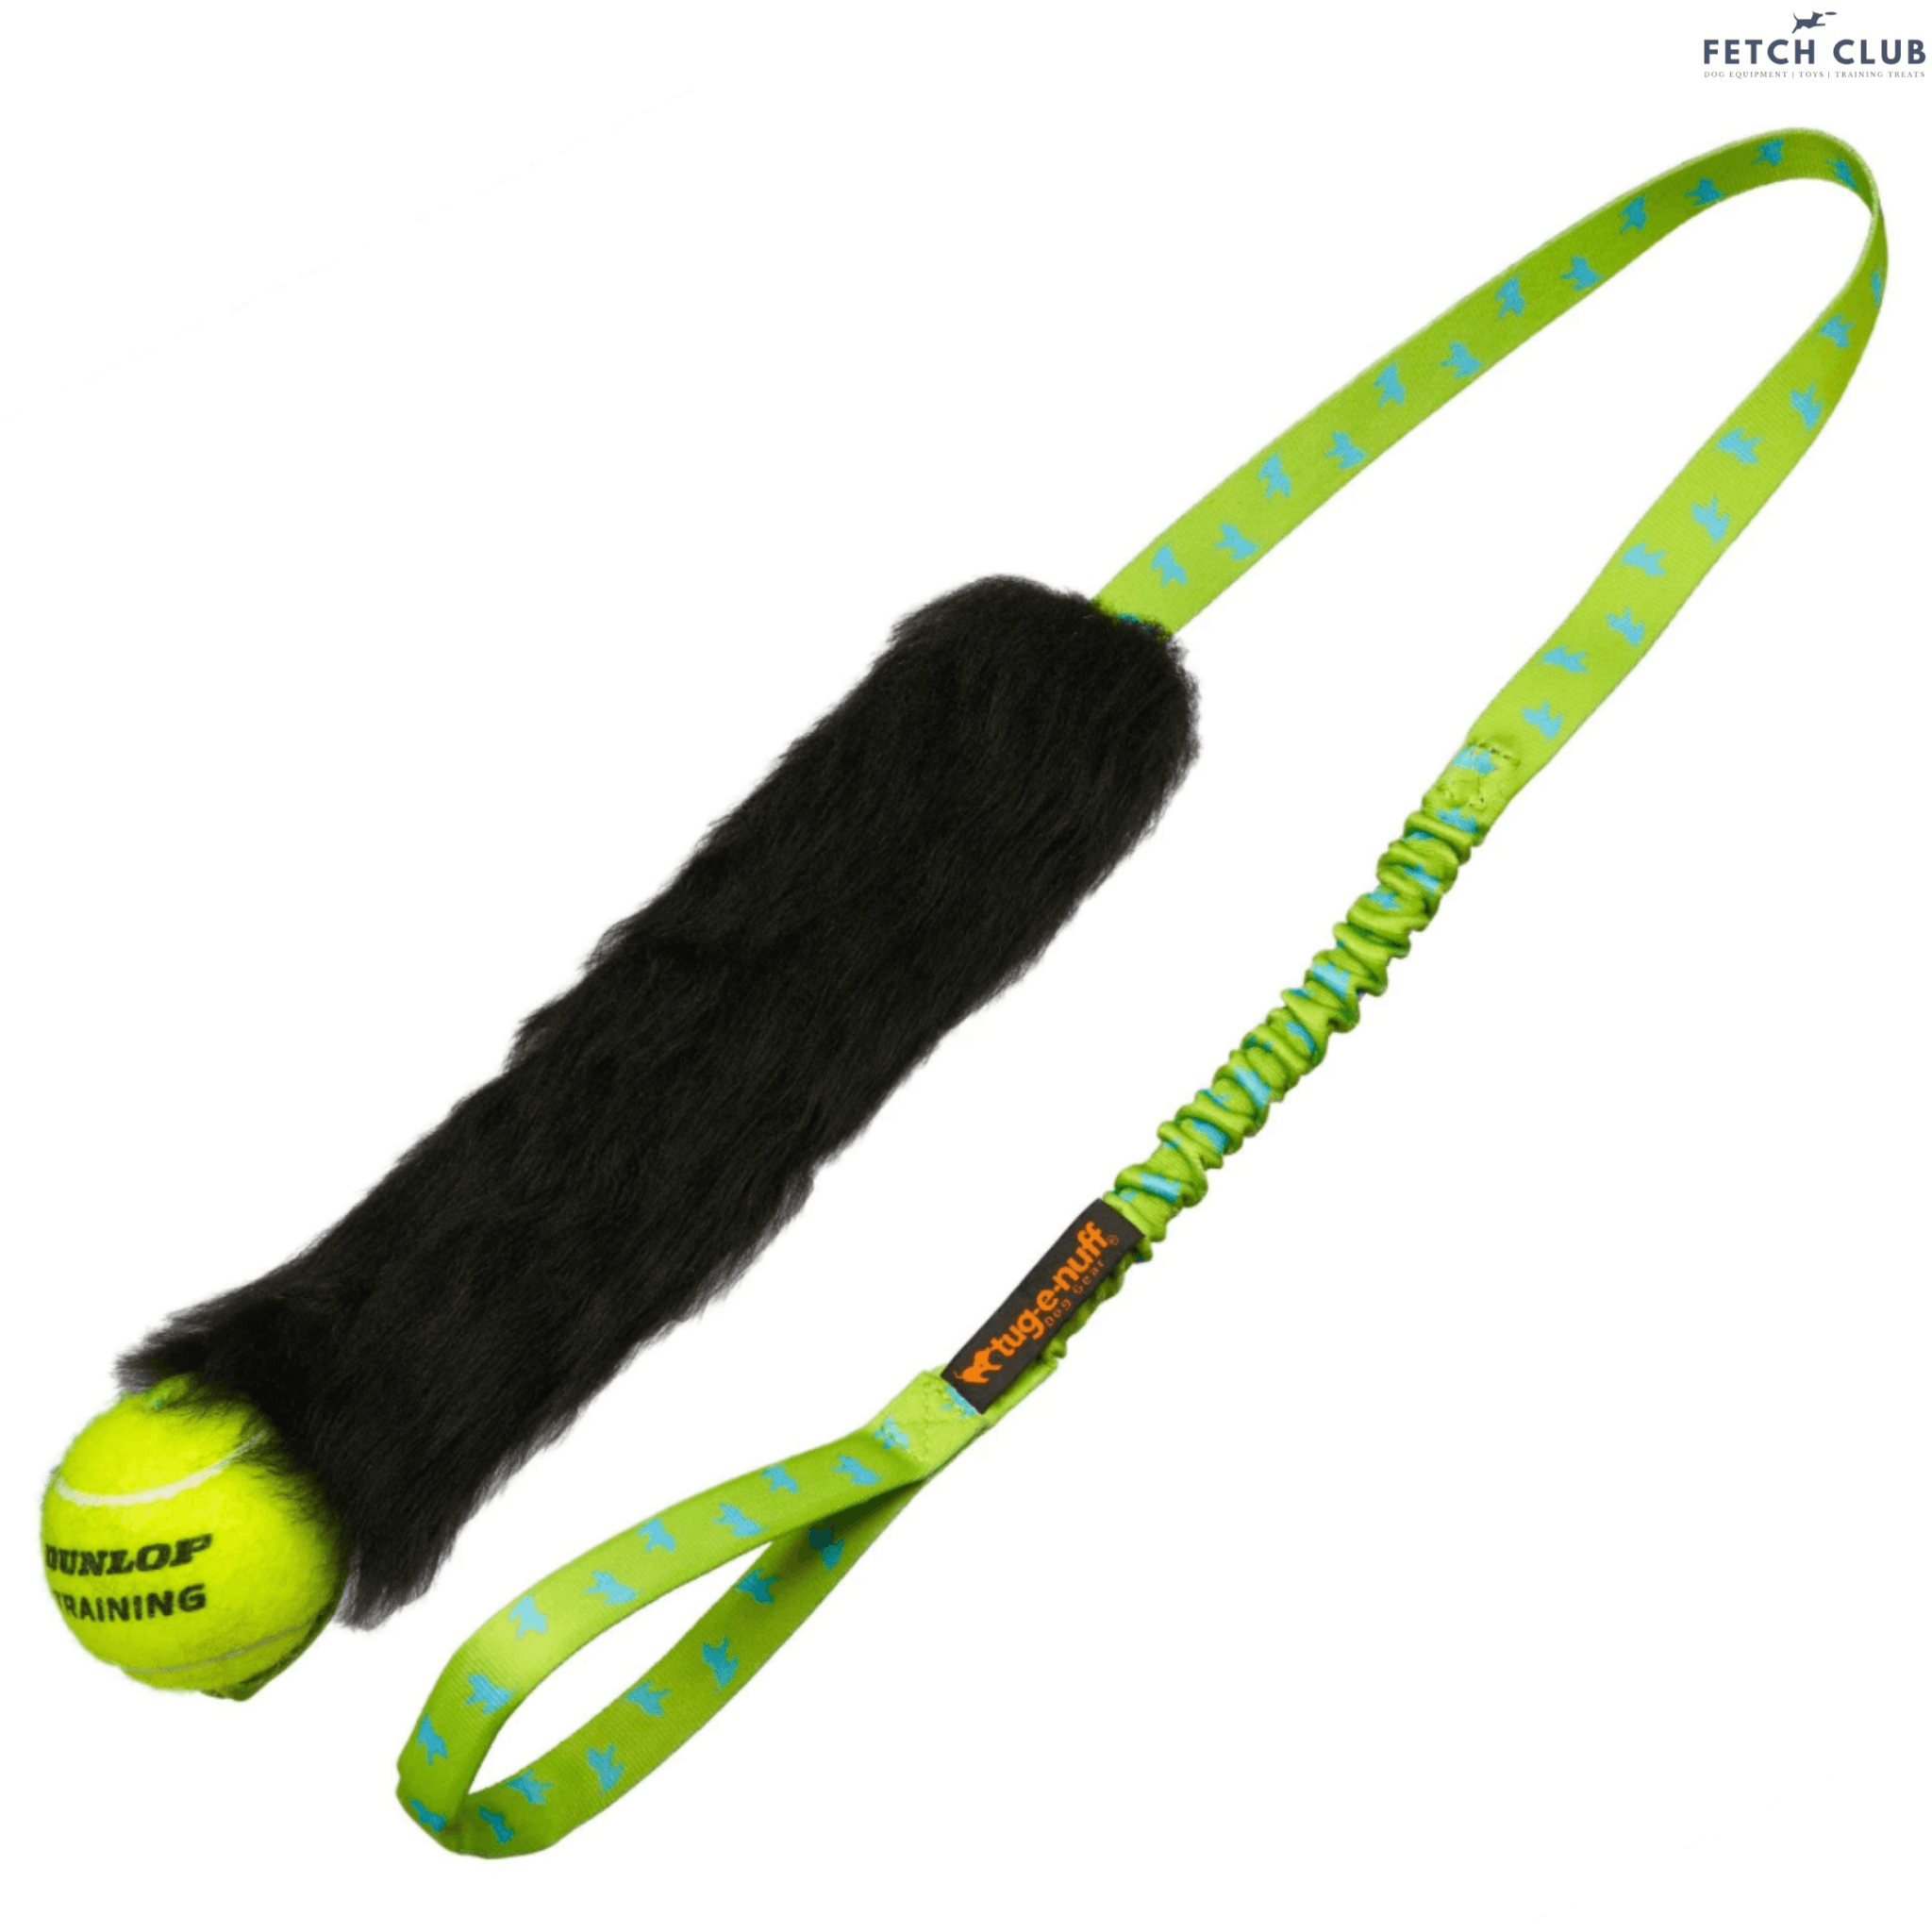 Tug-E-Nuff Sheepskin Bungee Chaser with Tennis Ball - Fetch Club Shop